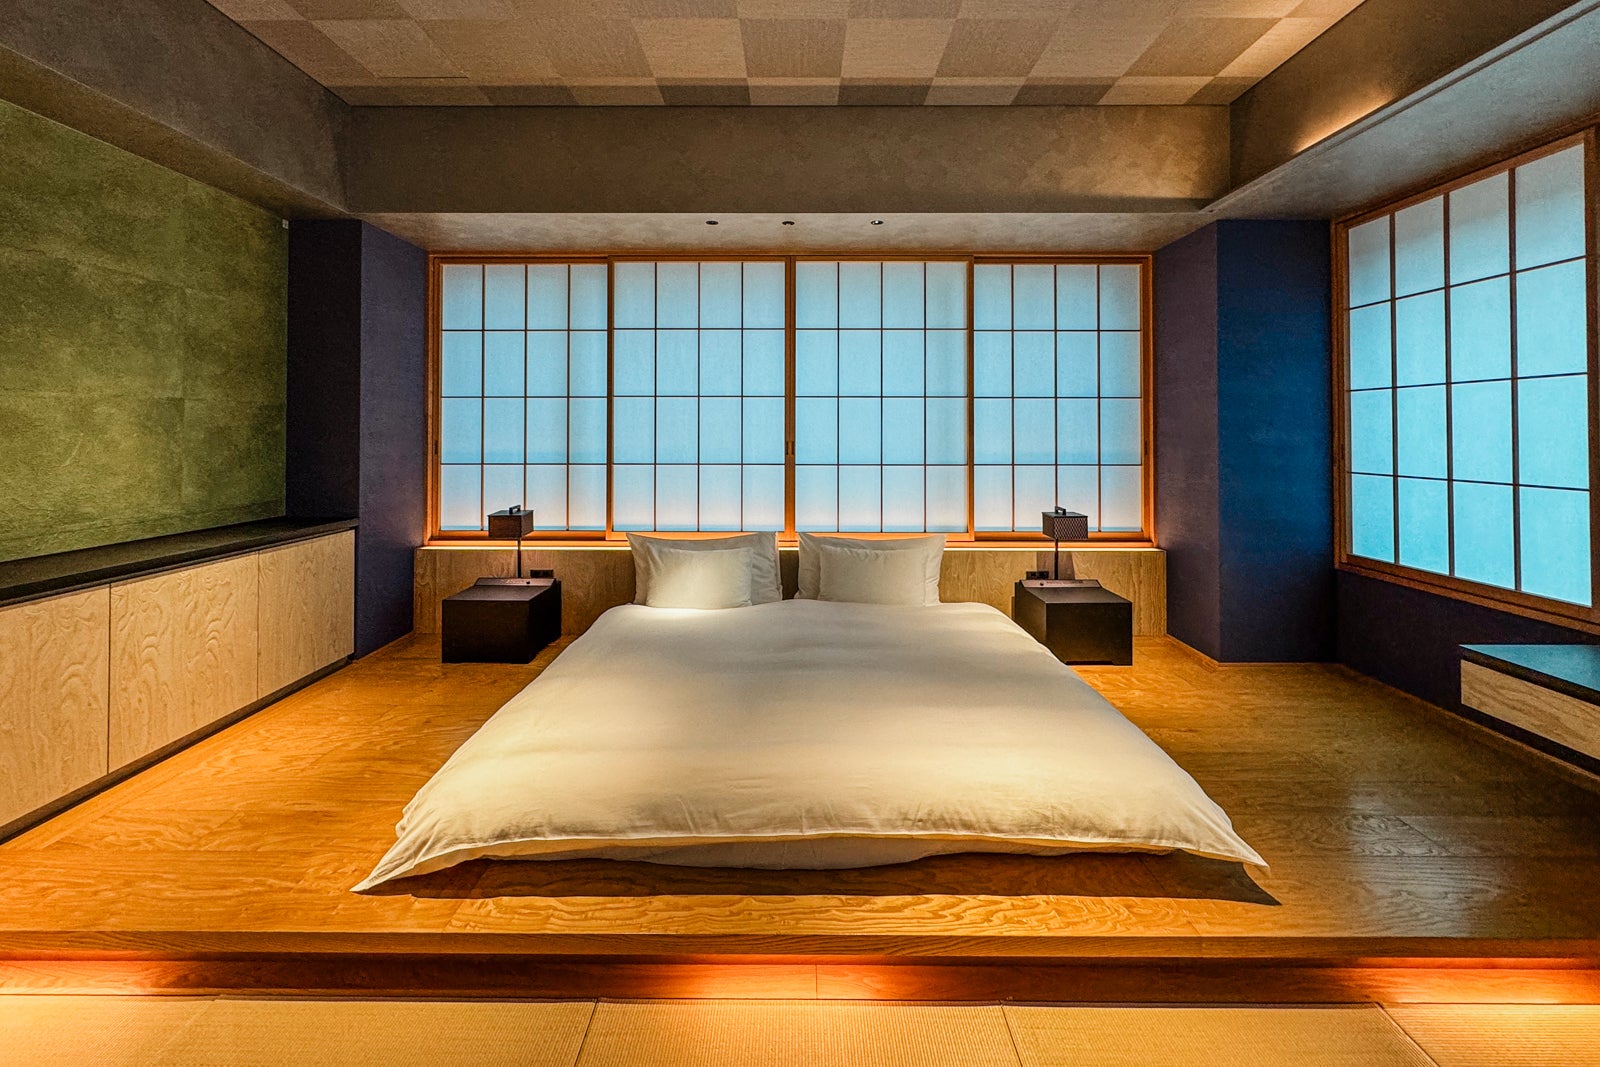 Hoshinoya Tokyo hotel review: Traditional Japanese hospitality in the big city